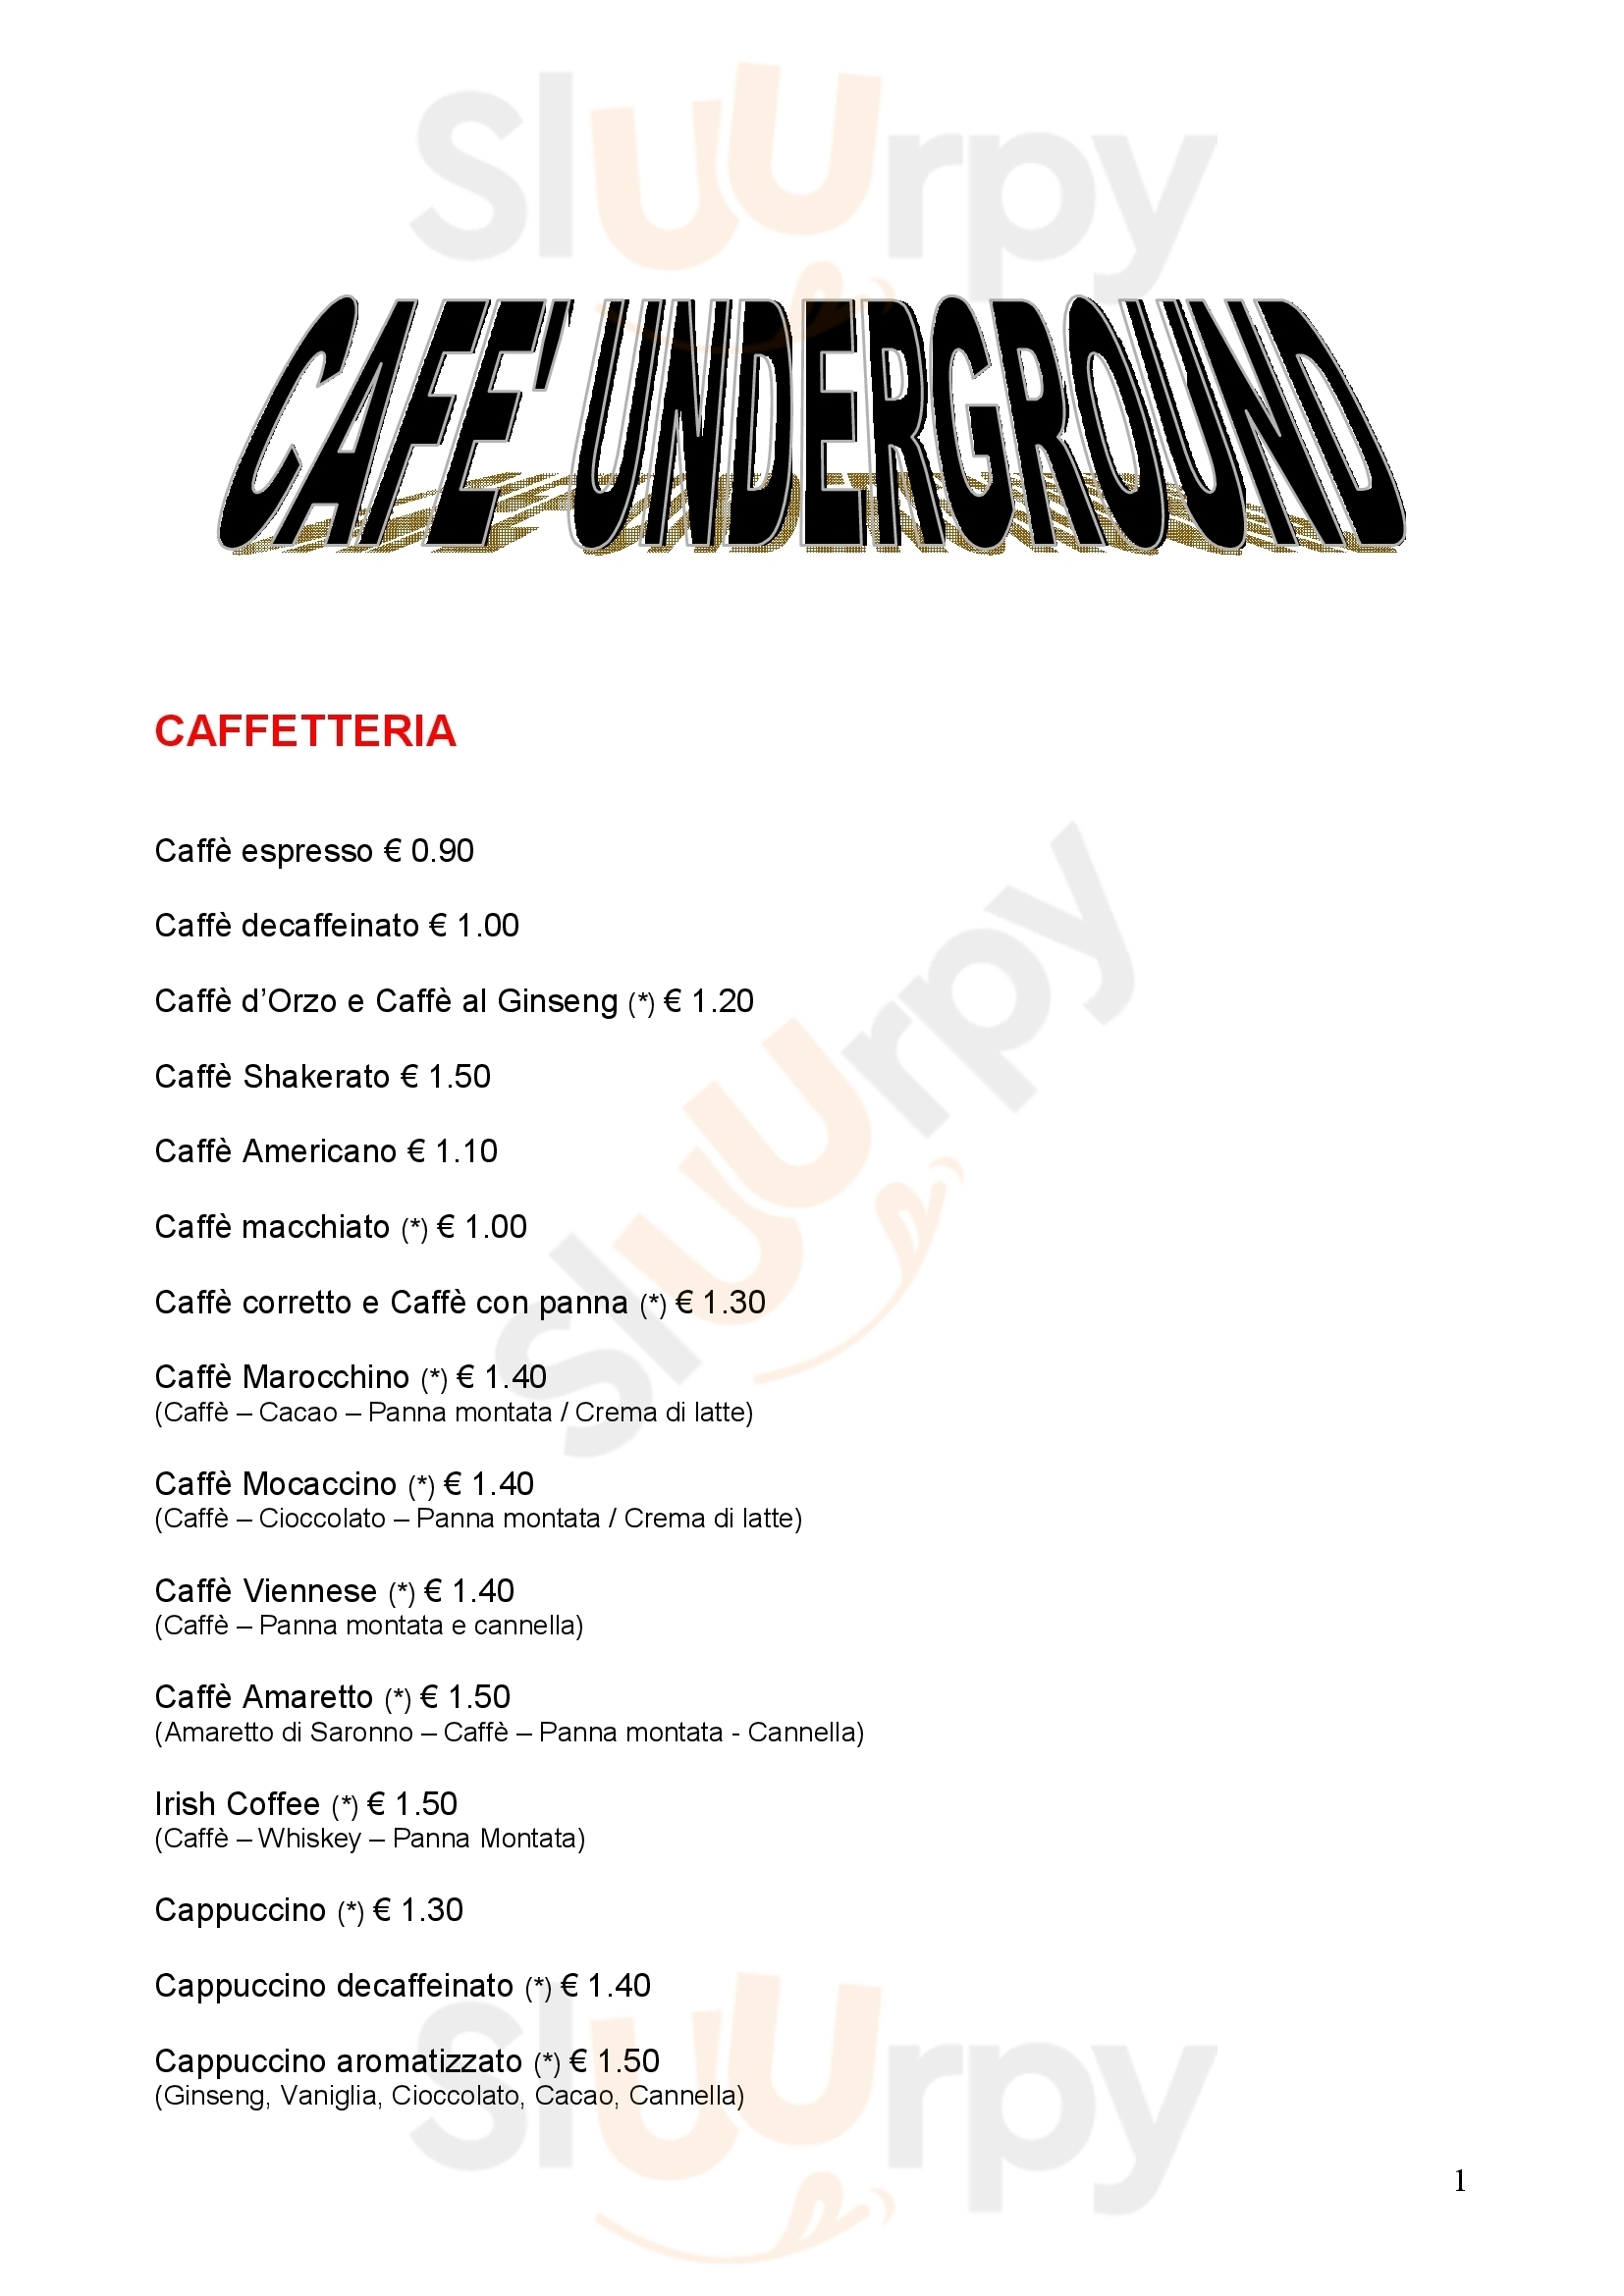 Cafe Underground Villasor menù 1 pagina